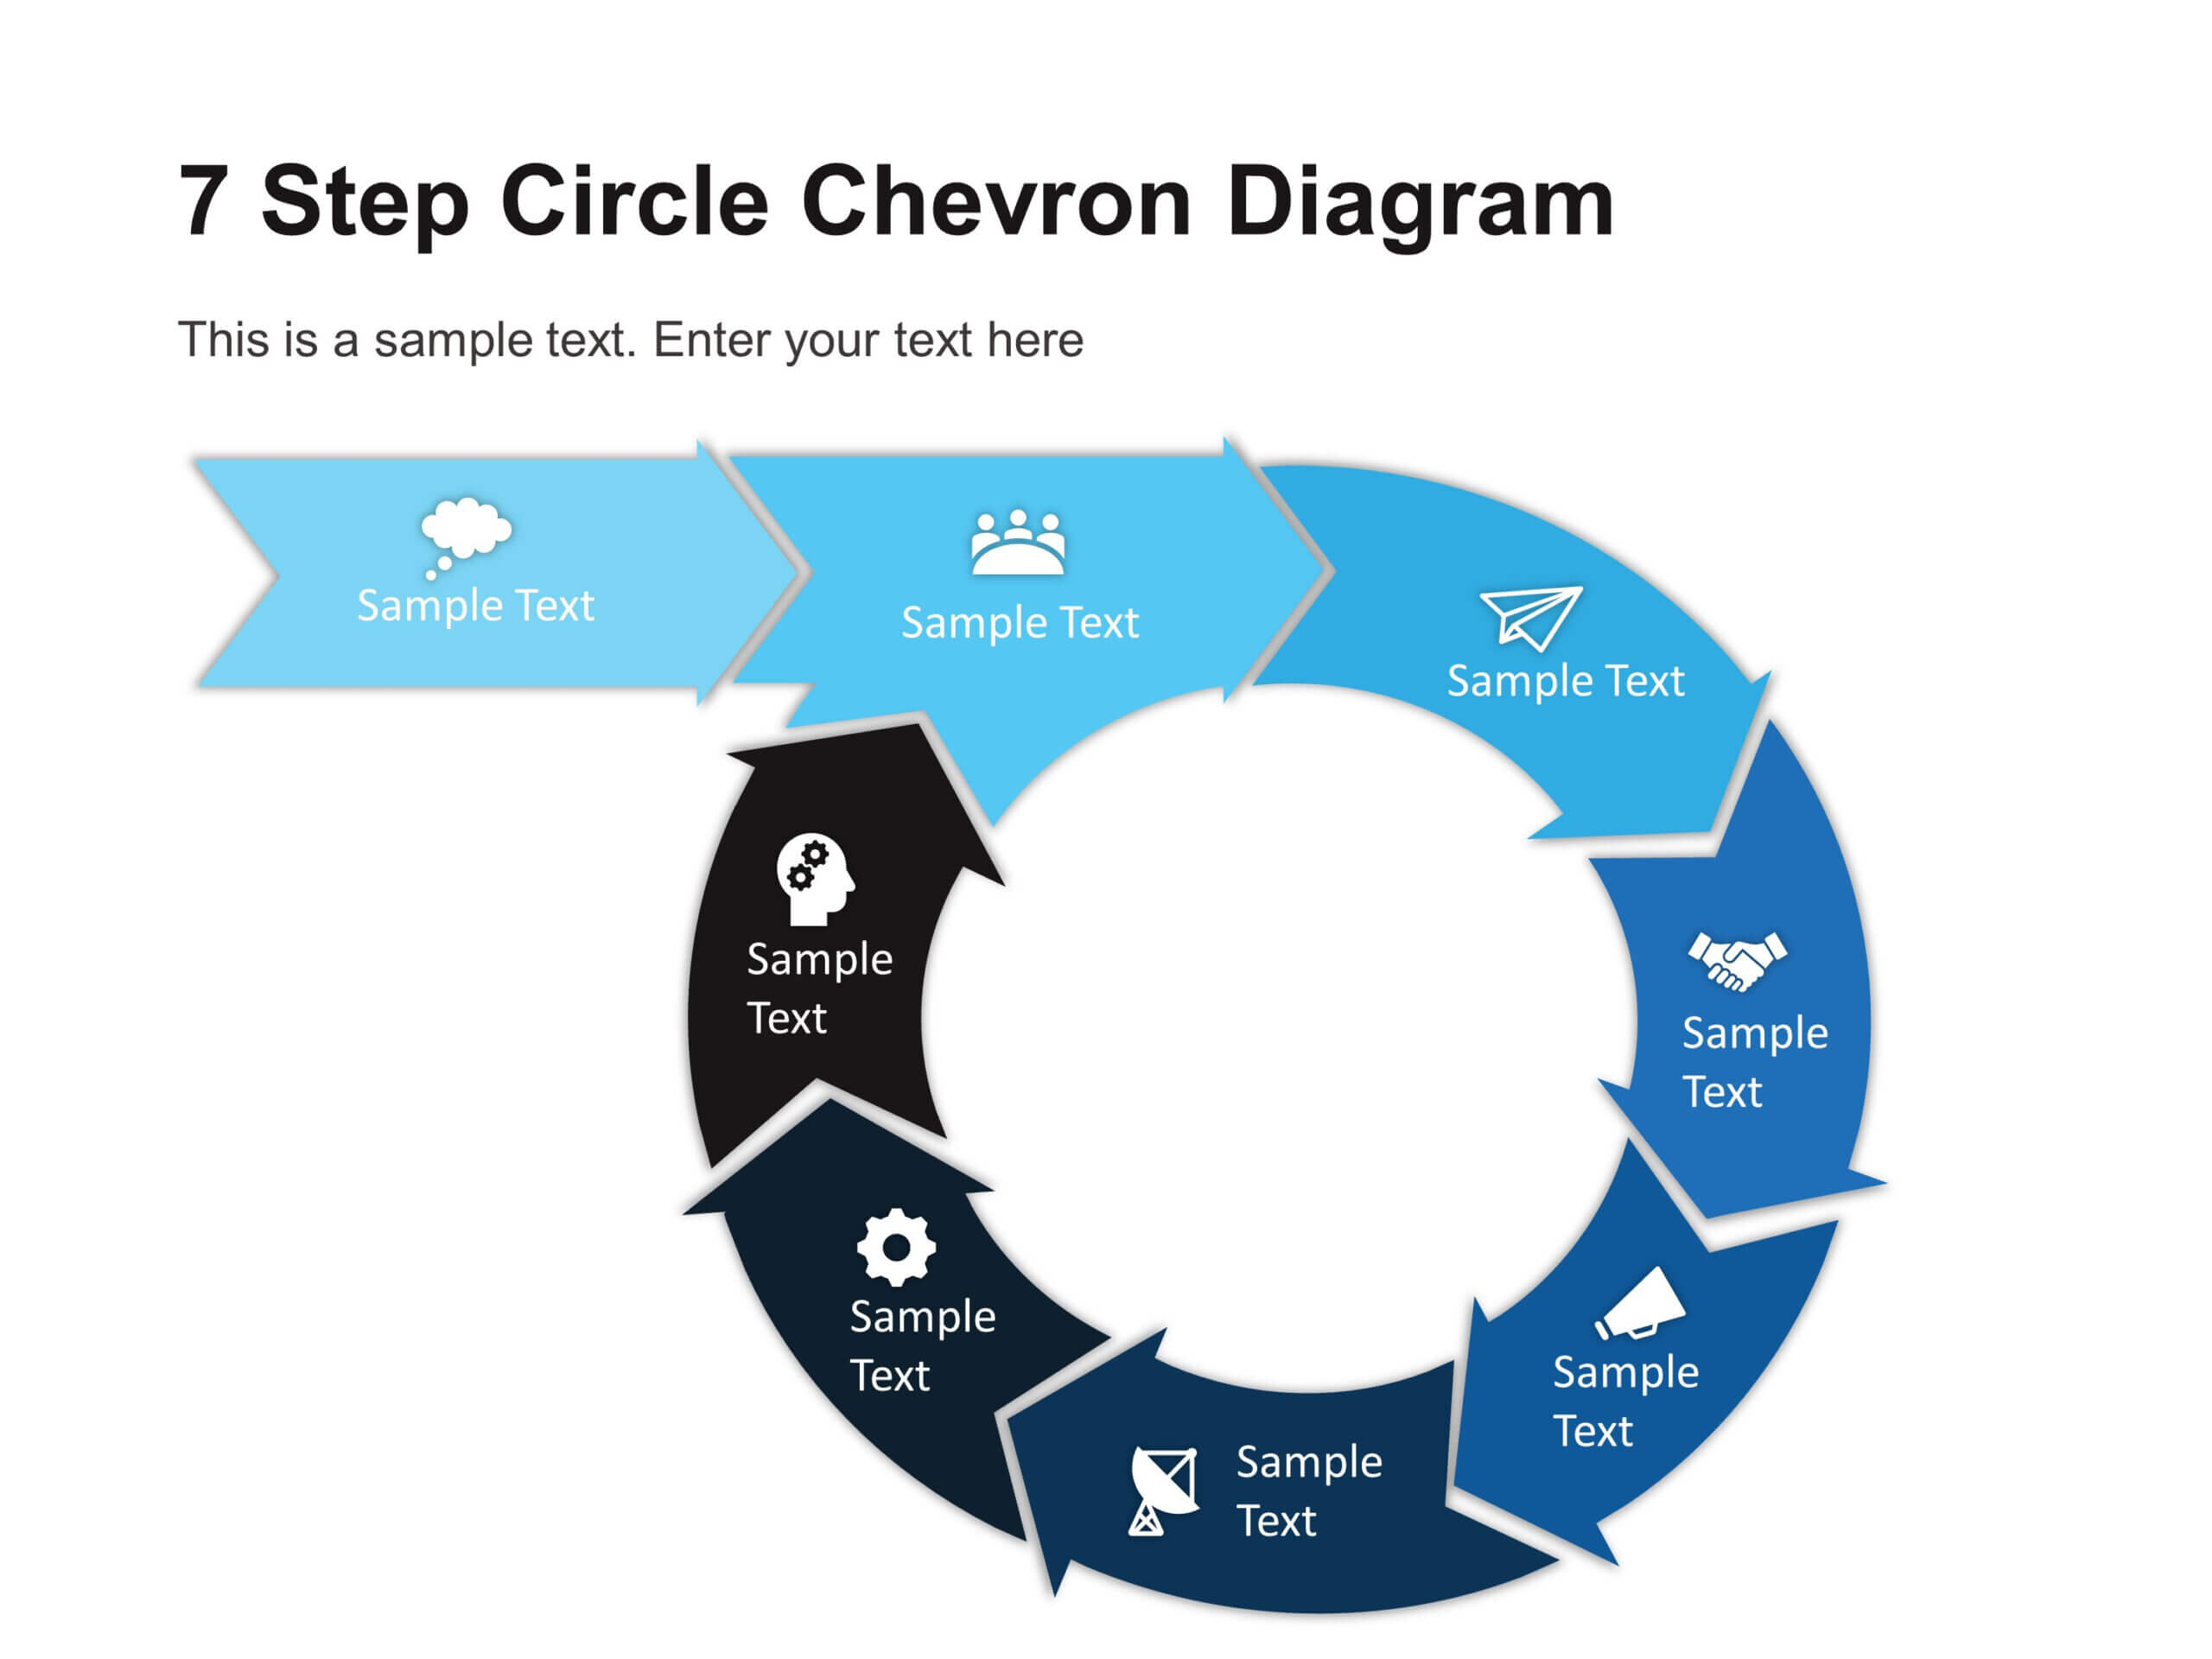 7-step-circular-chevron-diagram-template-chevron-regarding-powerpoint